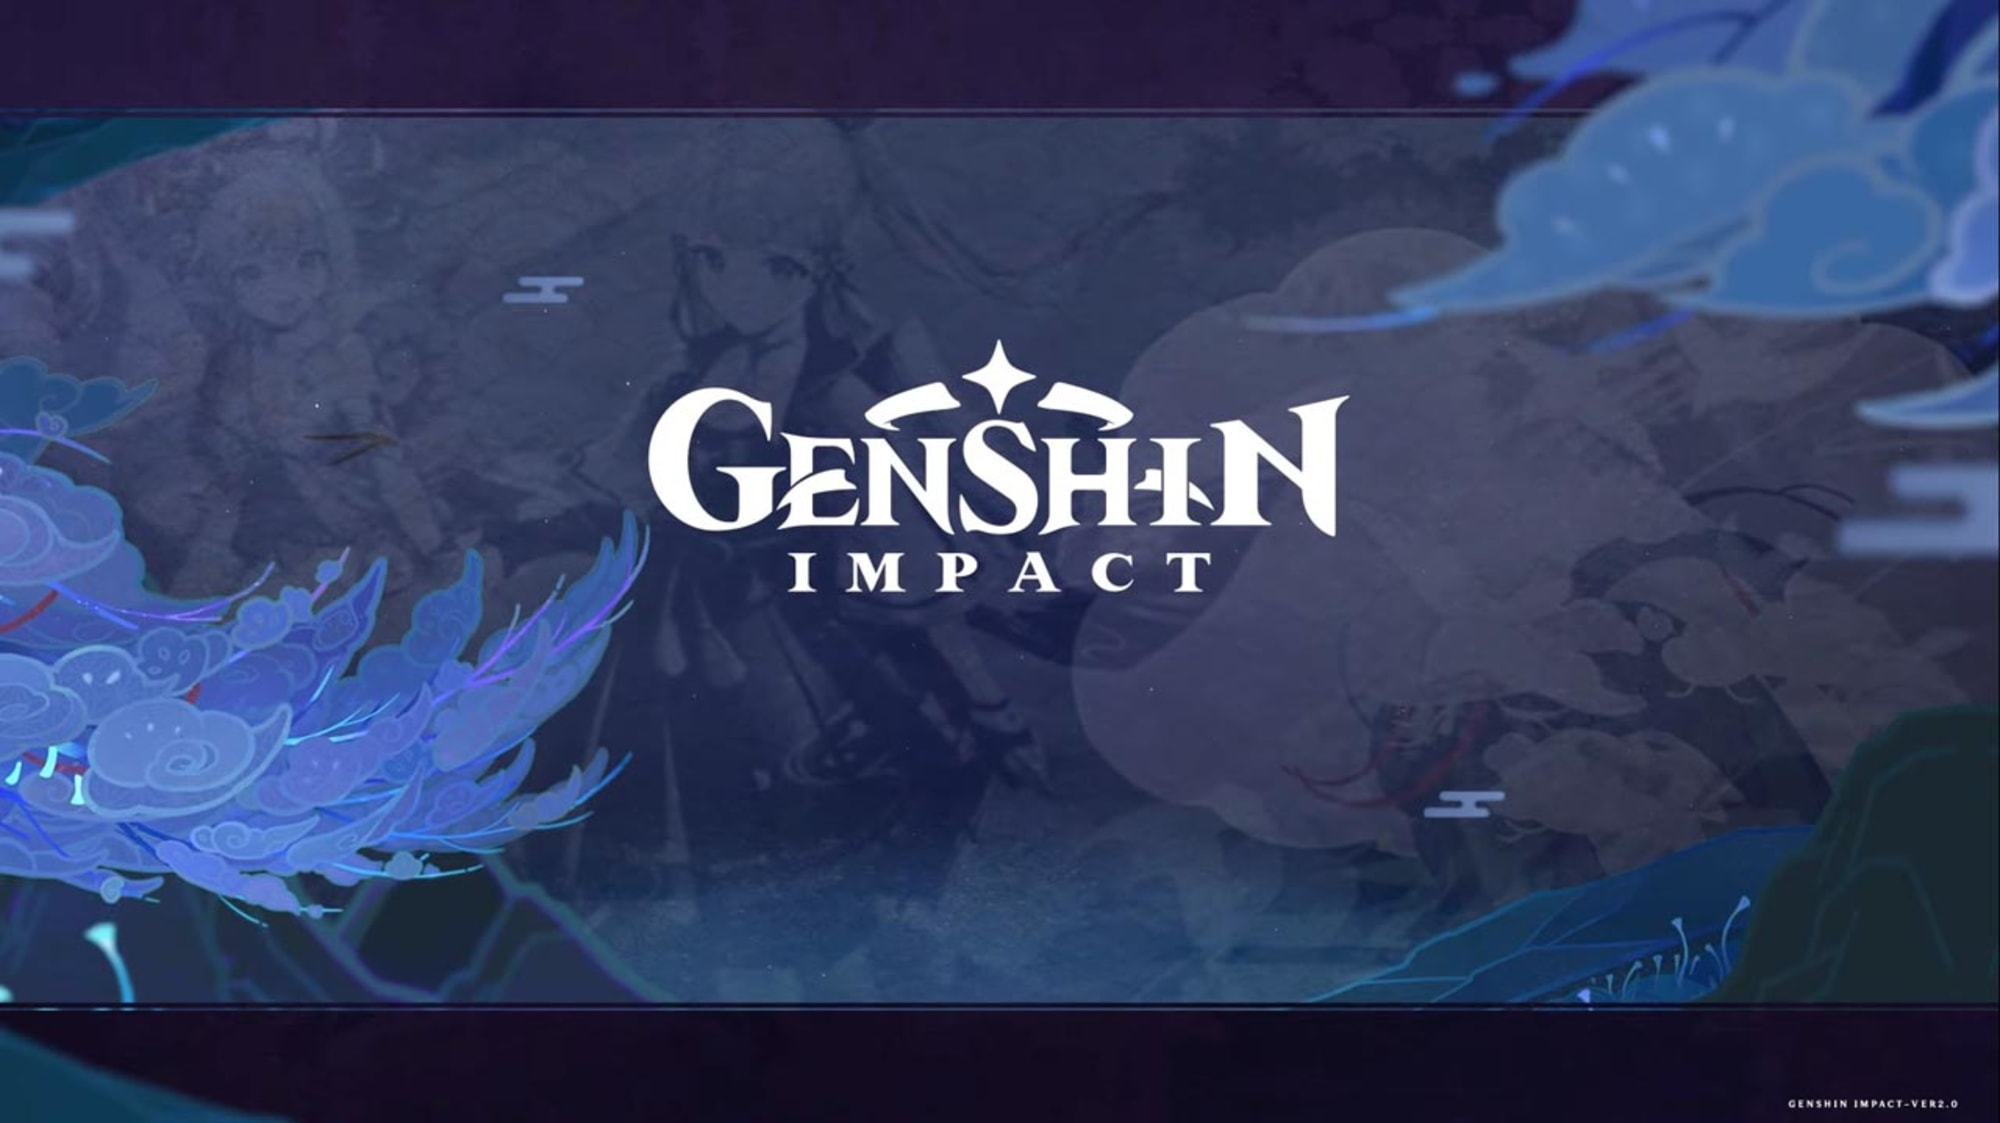 Is Genshin Impact cross platform? Cross saves made easy